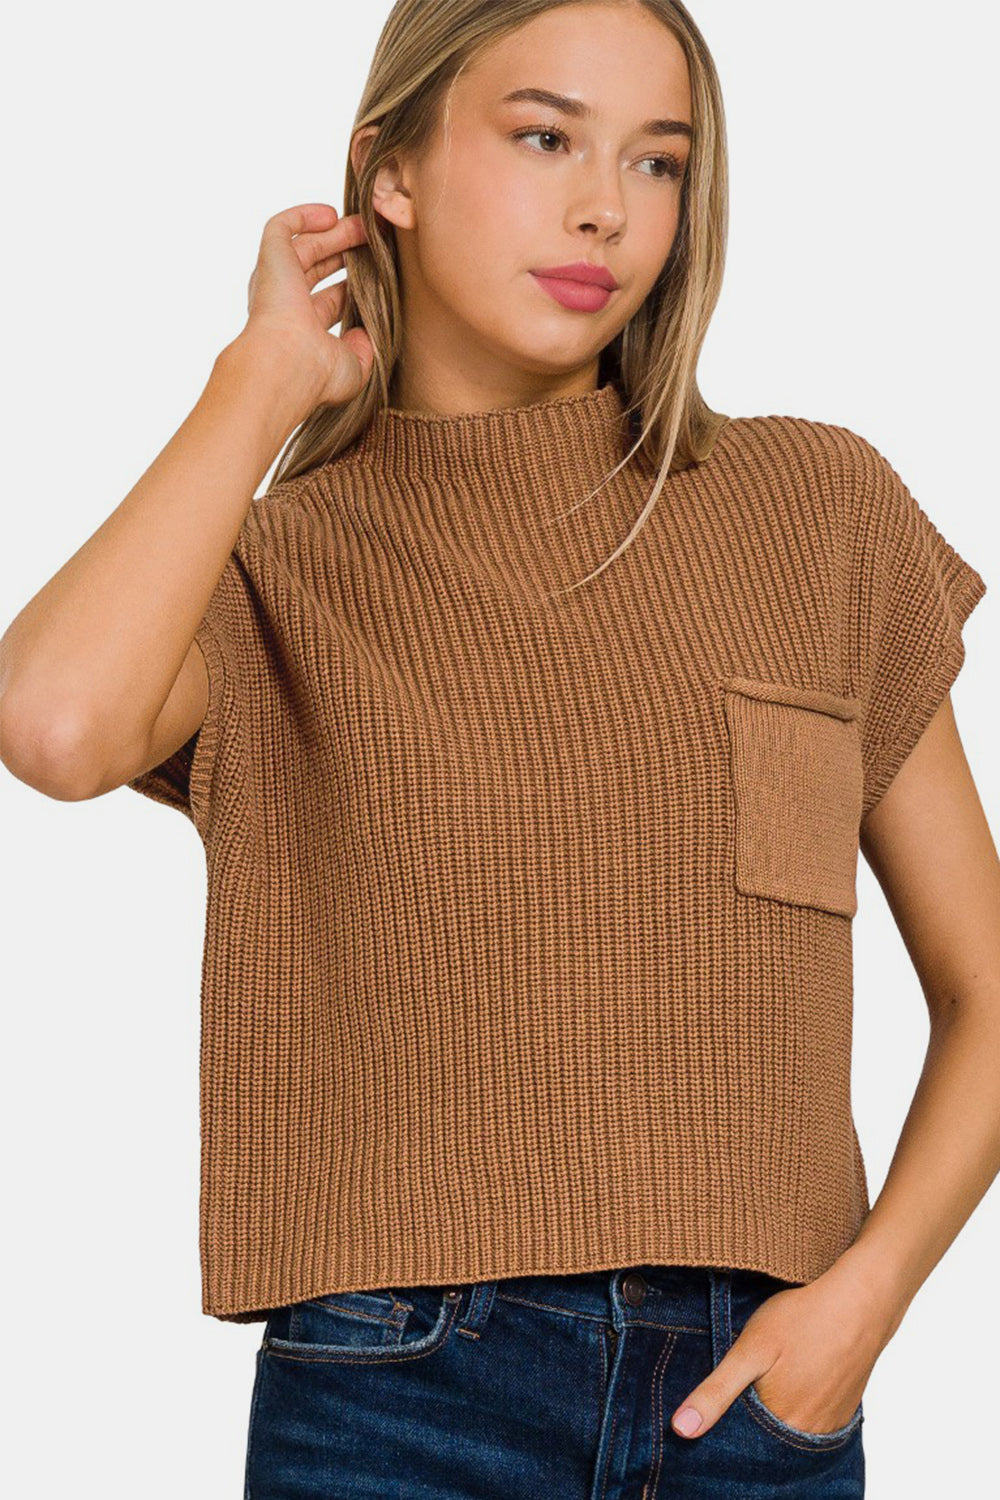 Zuri Cropped Sweater